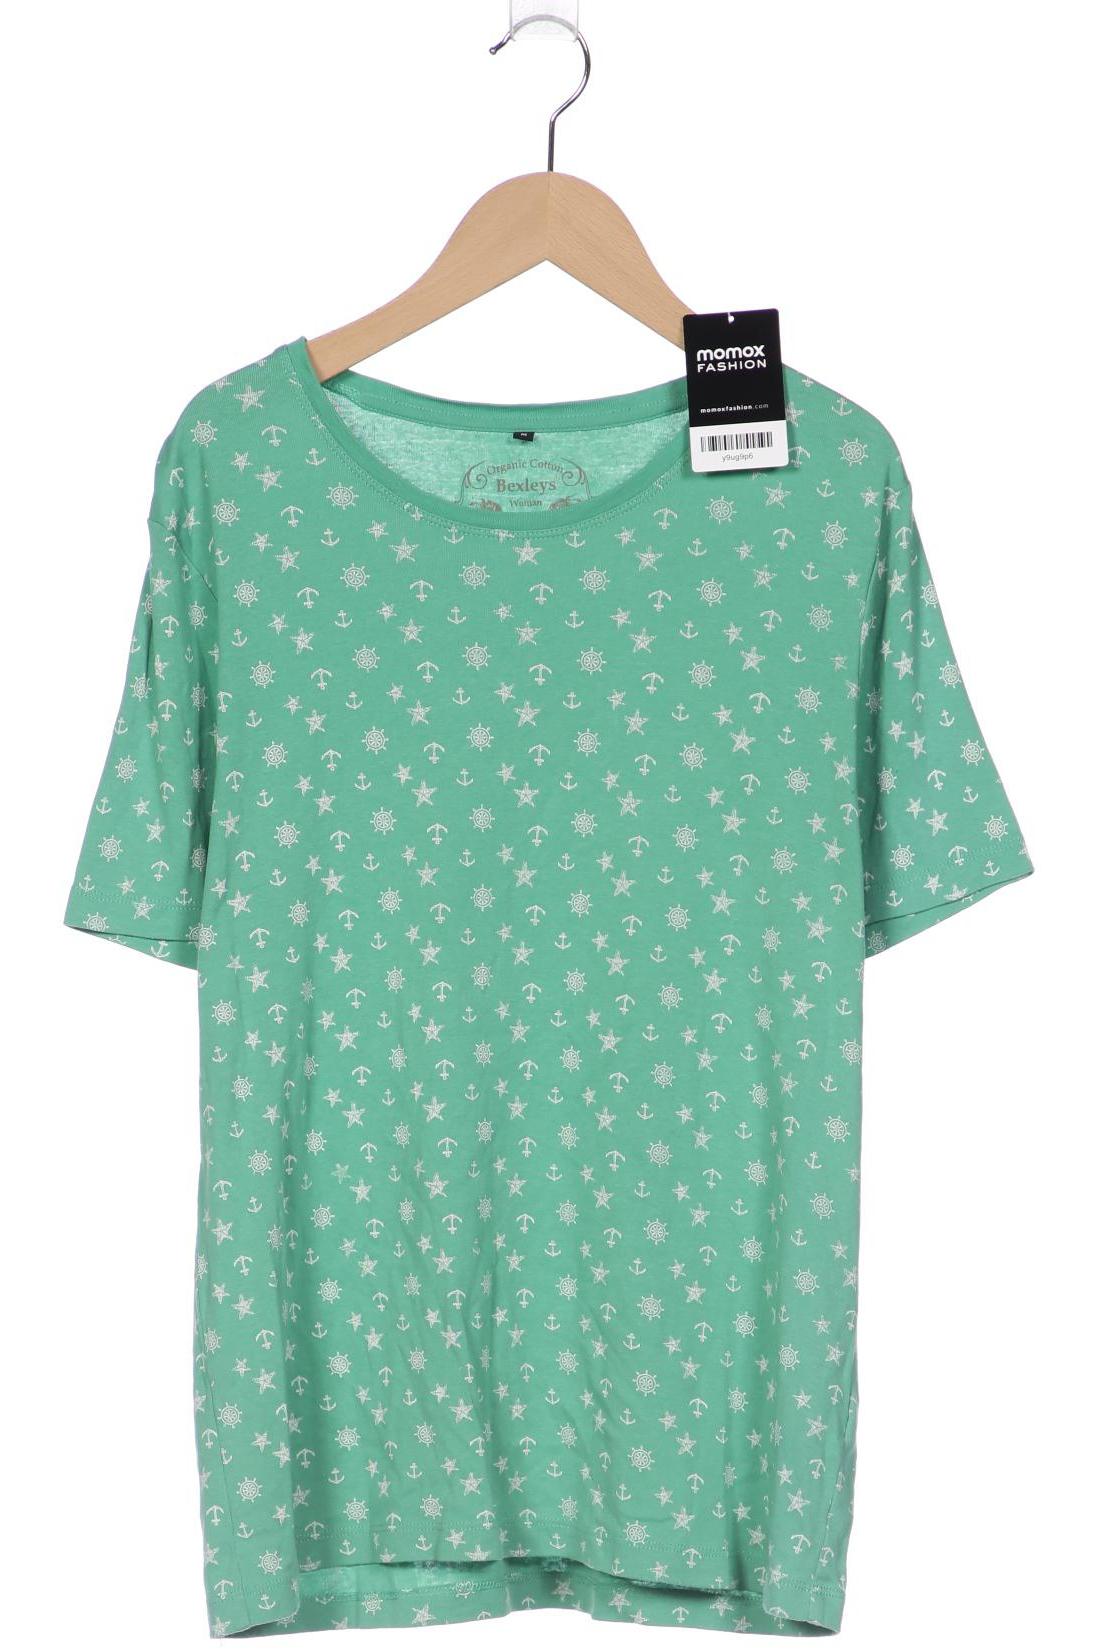 Bexleys Damen T-Shirt, grün von Bexleys